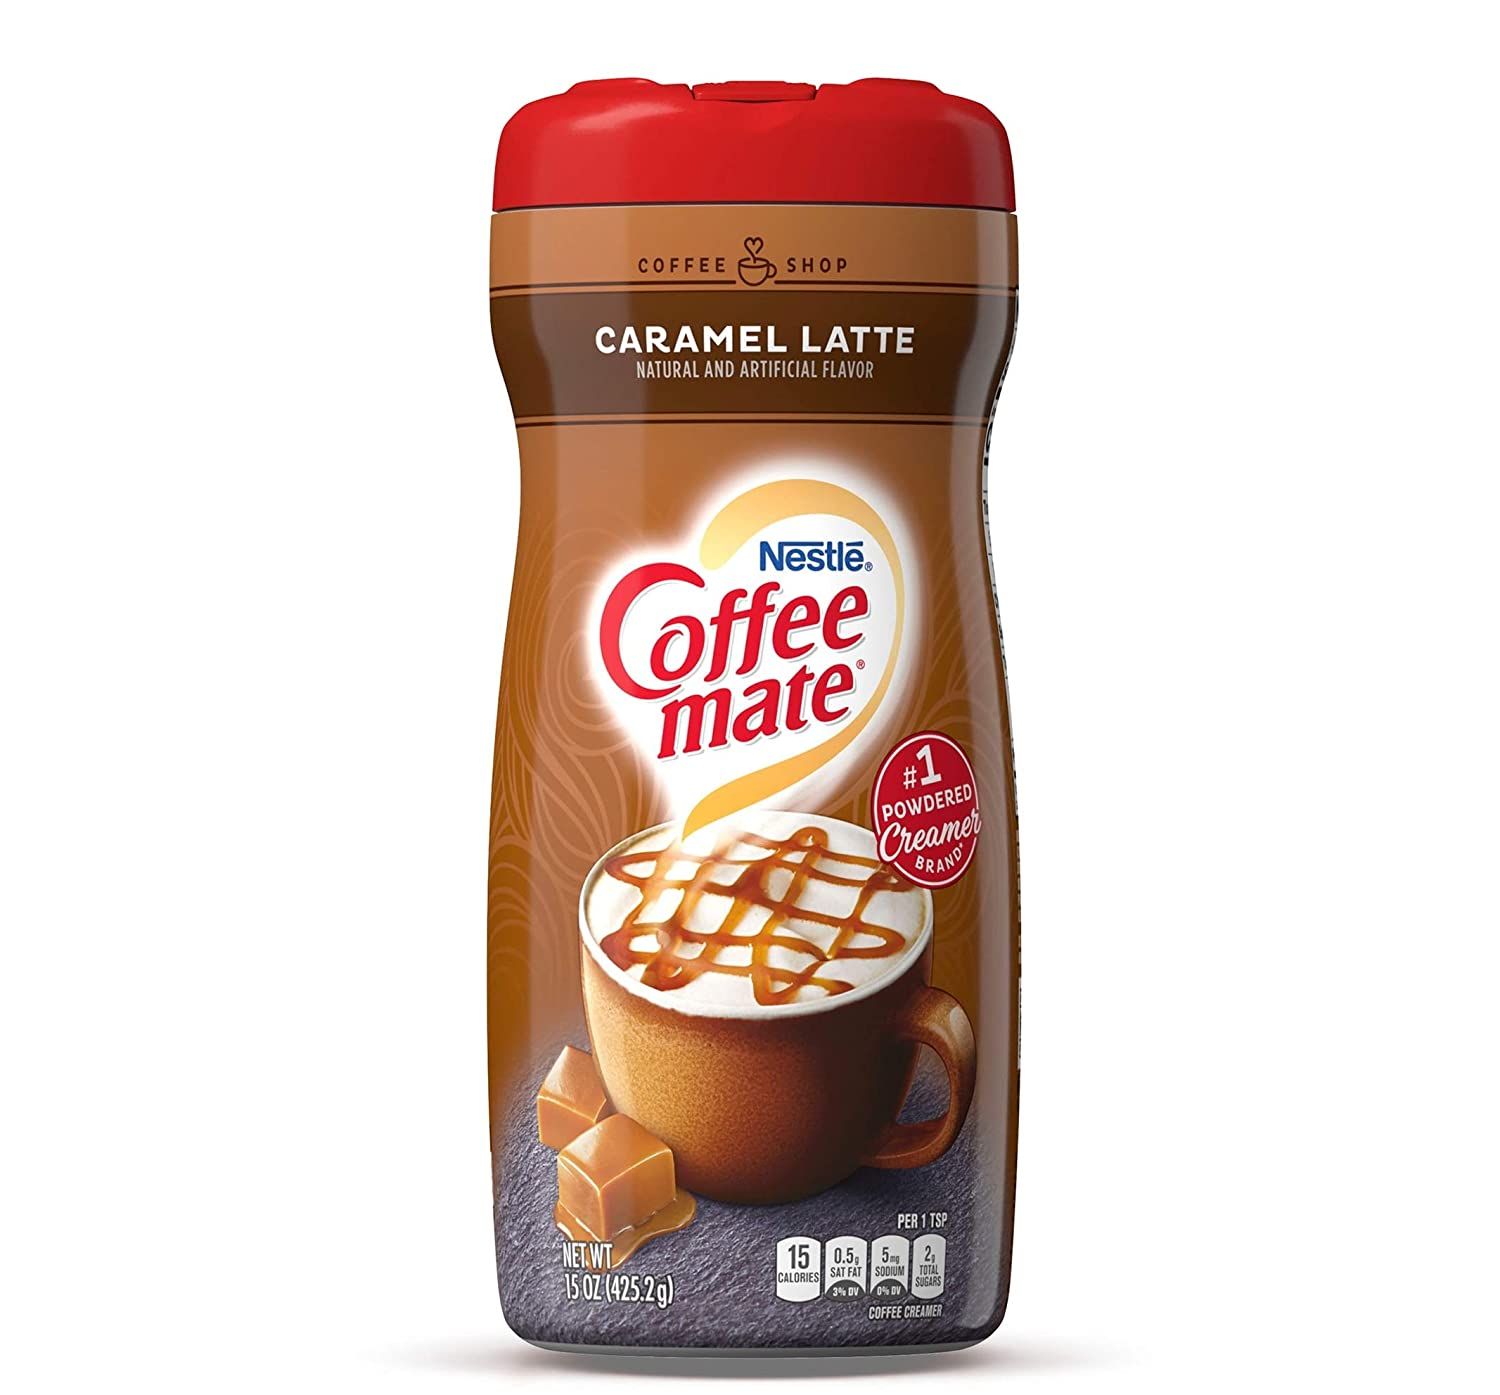 Nestle Caramel Latte Coffee Mate Image